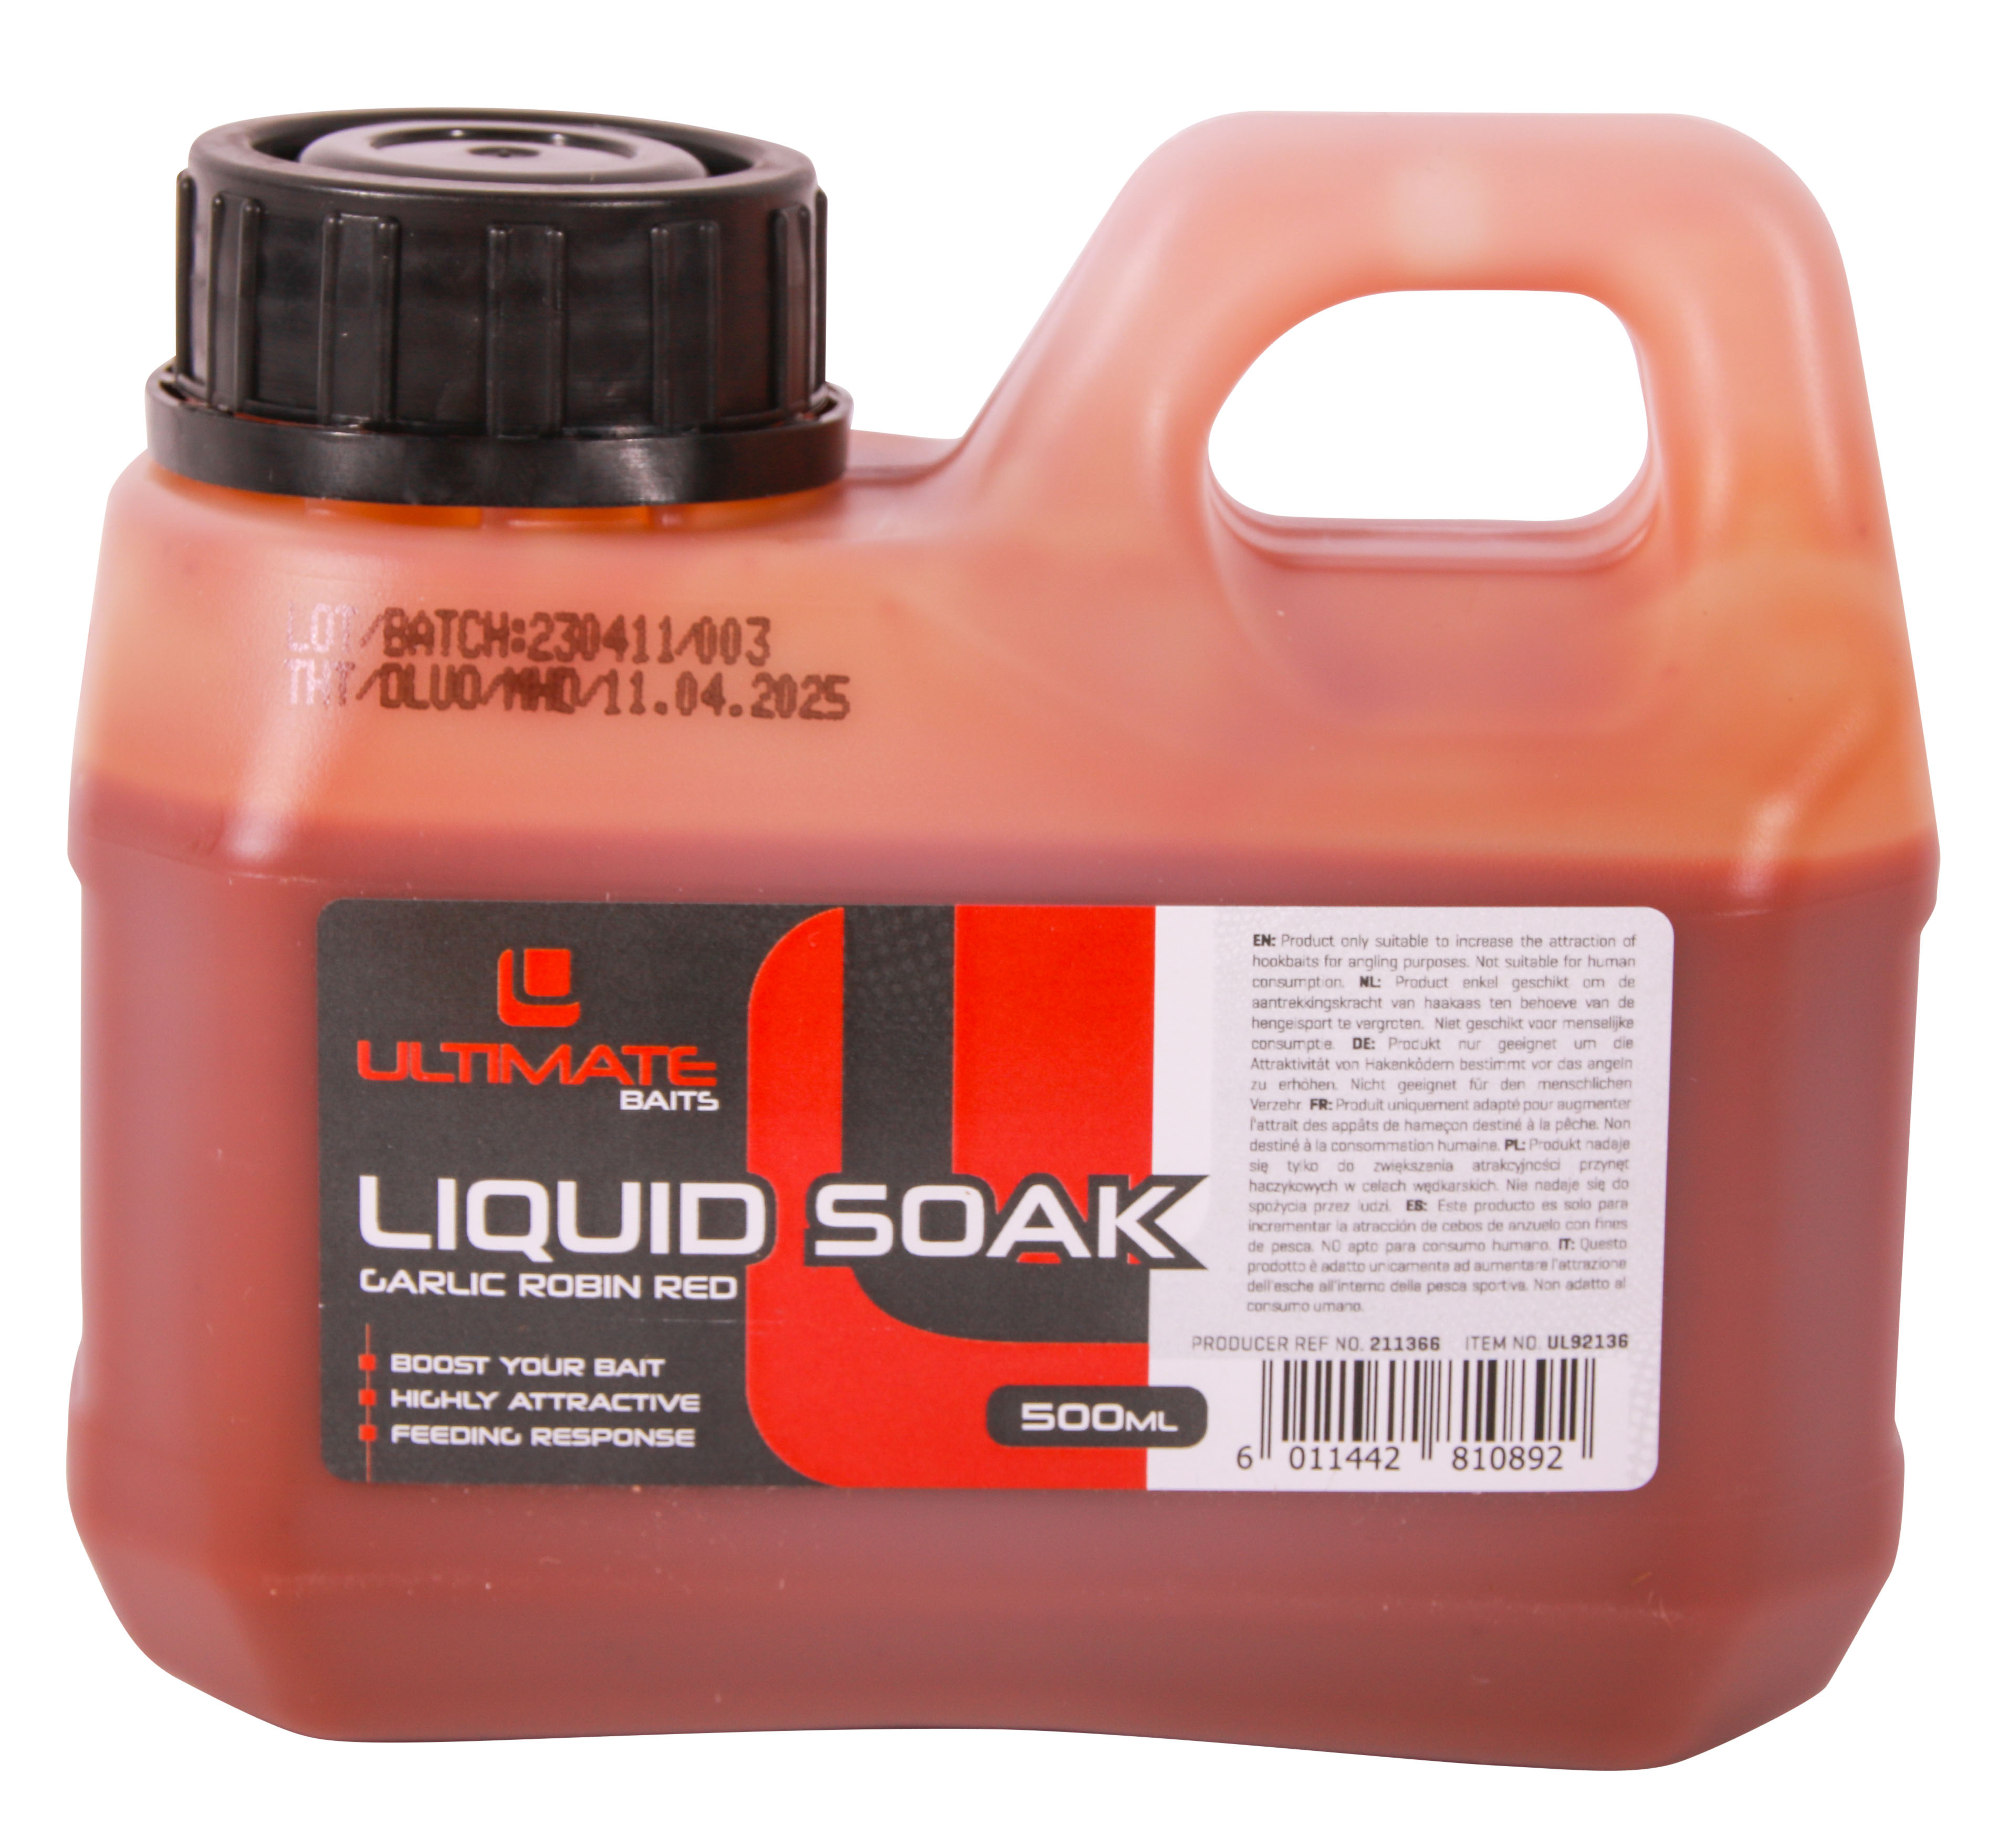 Ultimate Baits Liquid Soak 500ml